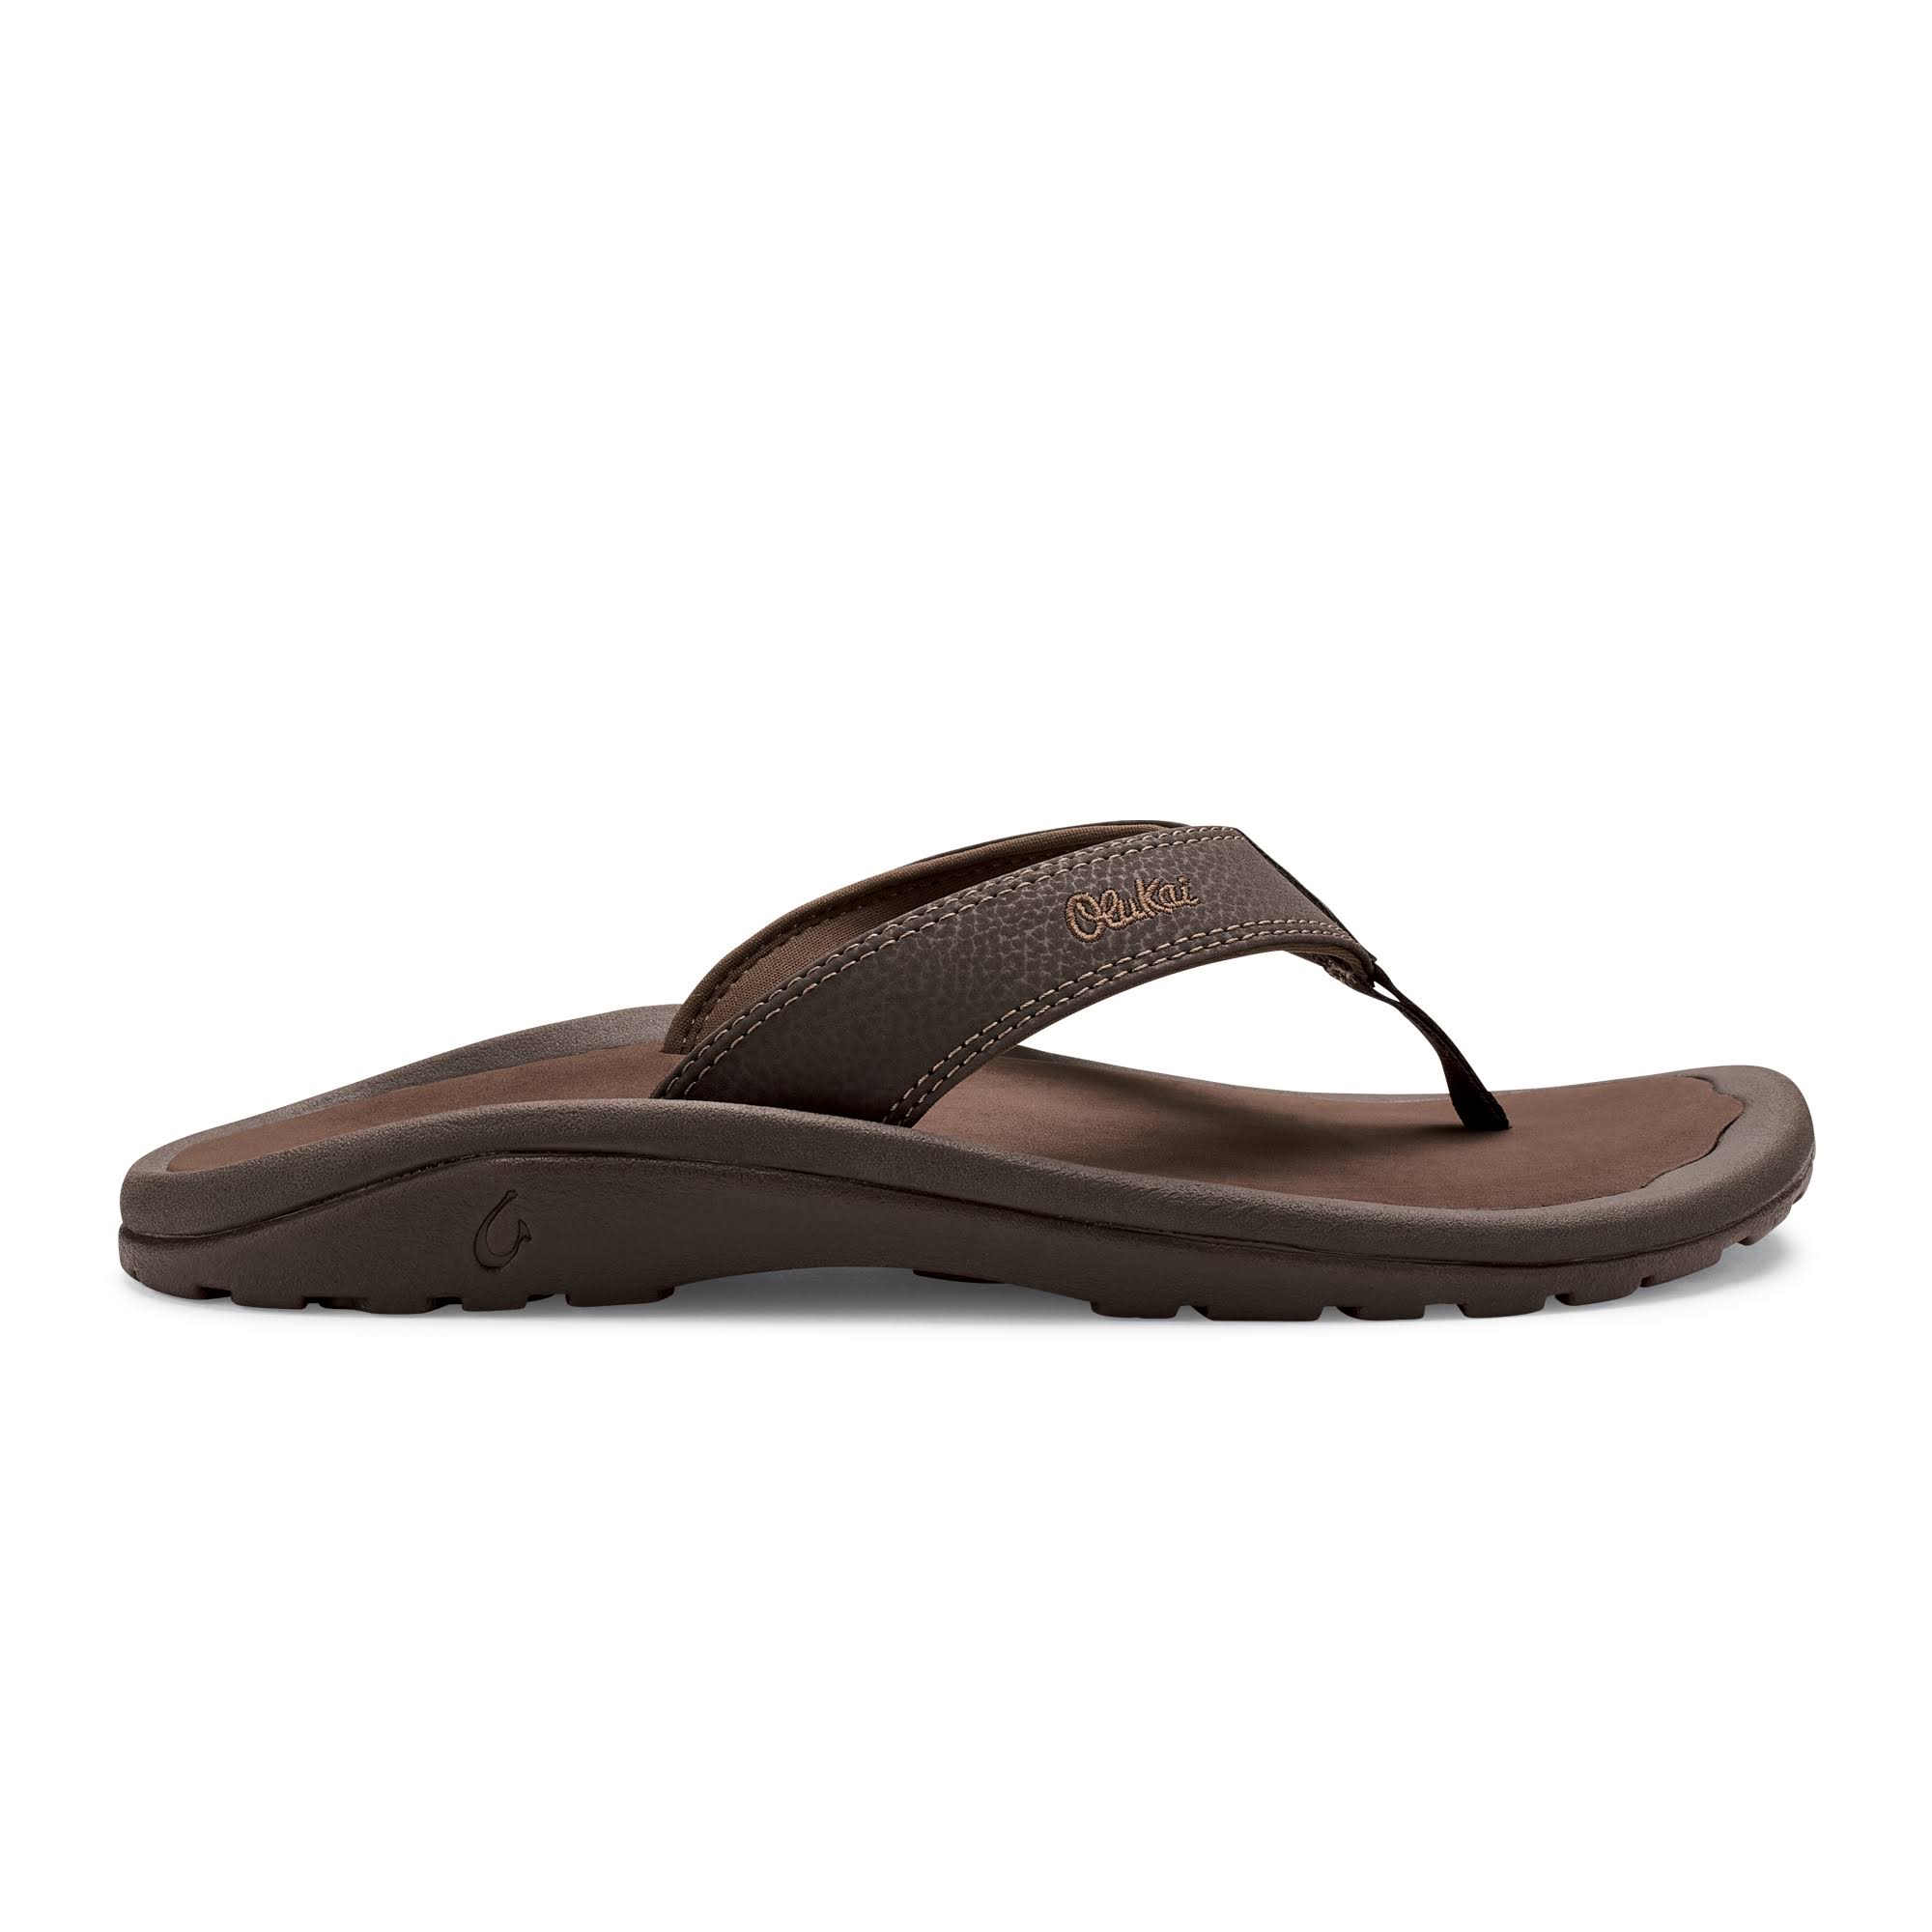 OluKai Ohana Mens Thong Flip Flop Sandals - 13 US, Dark Java